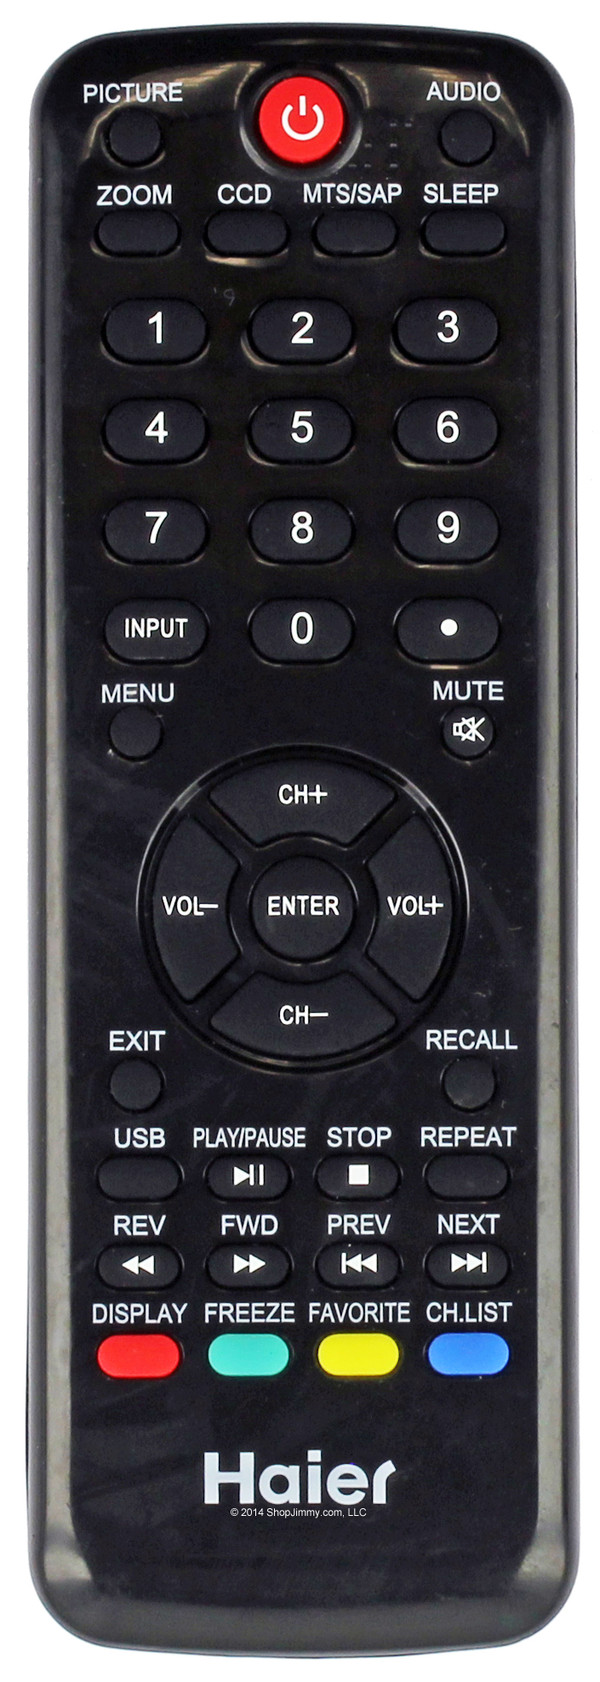 Haier TV-5620-135 (HTR-D09B) Remote Control